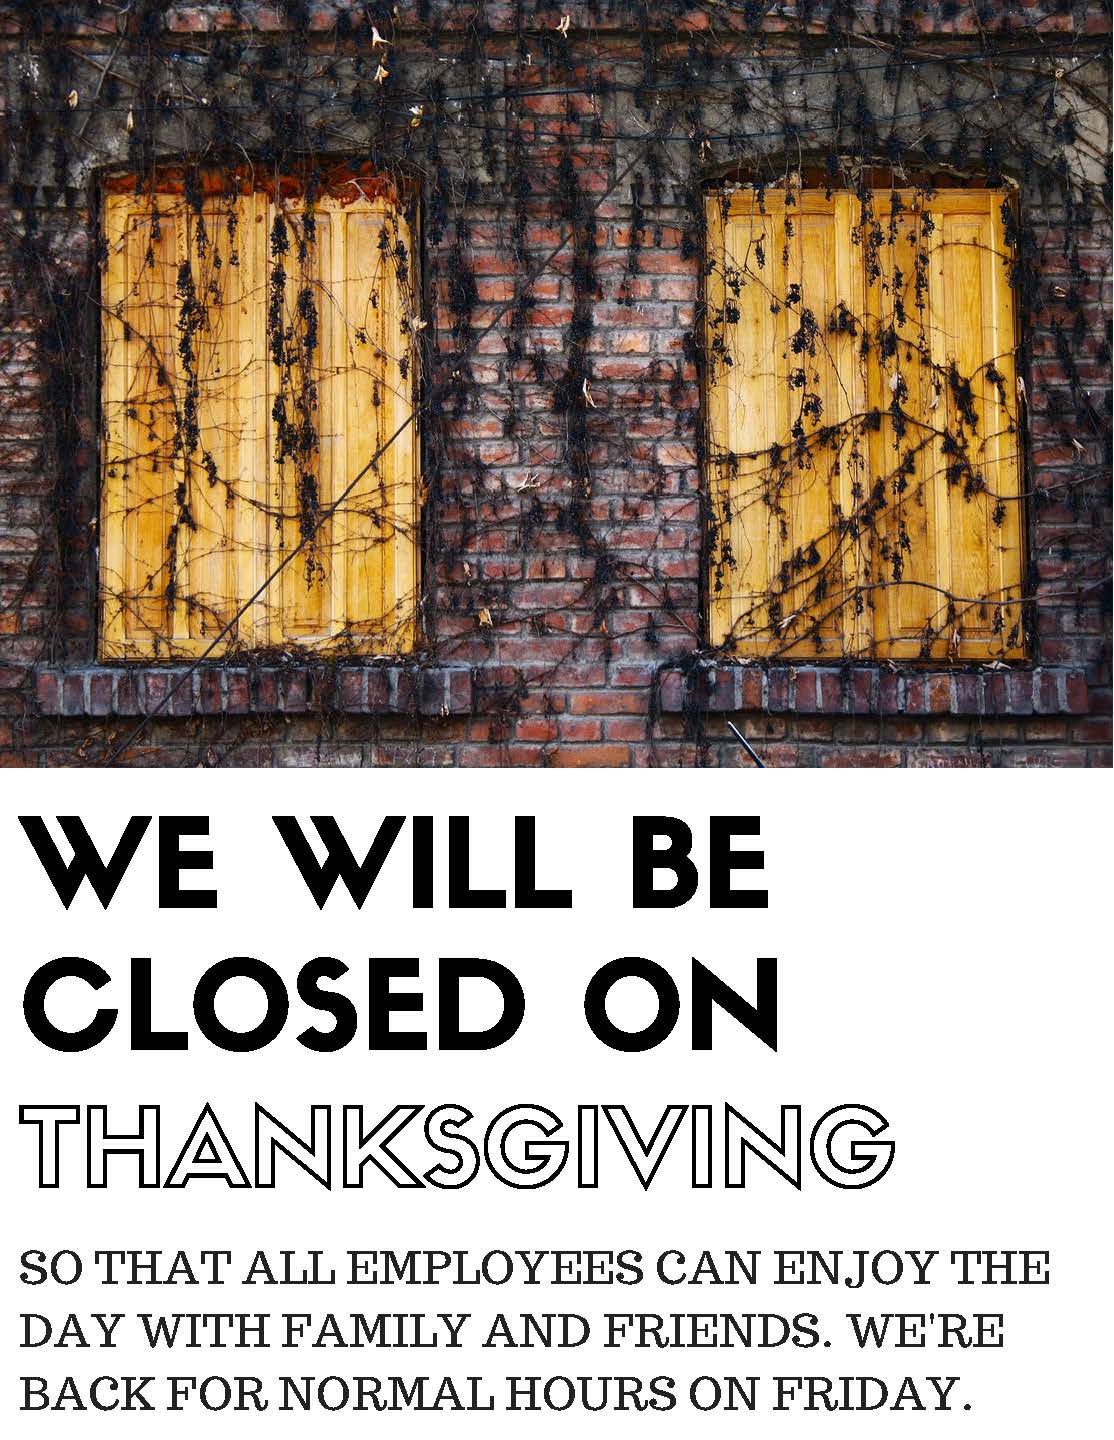 closed-thanksgiving